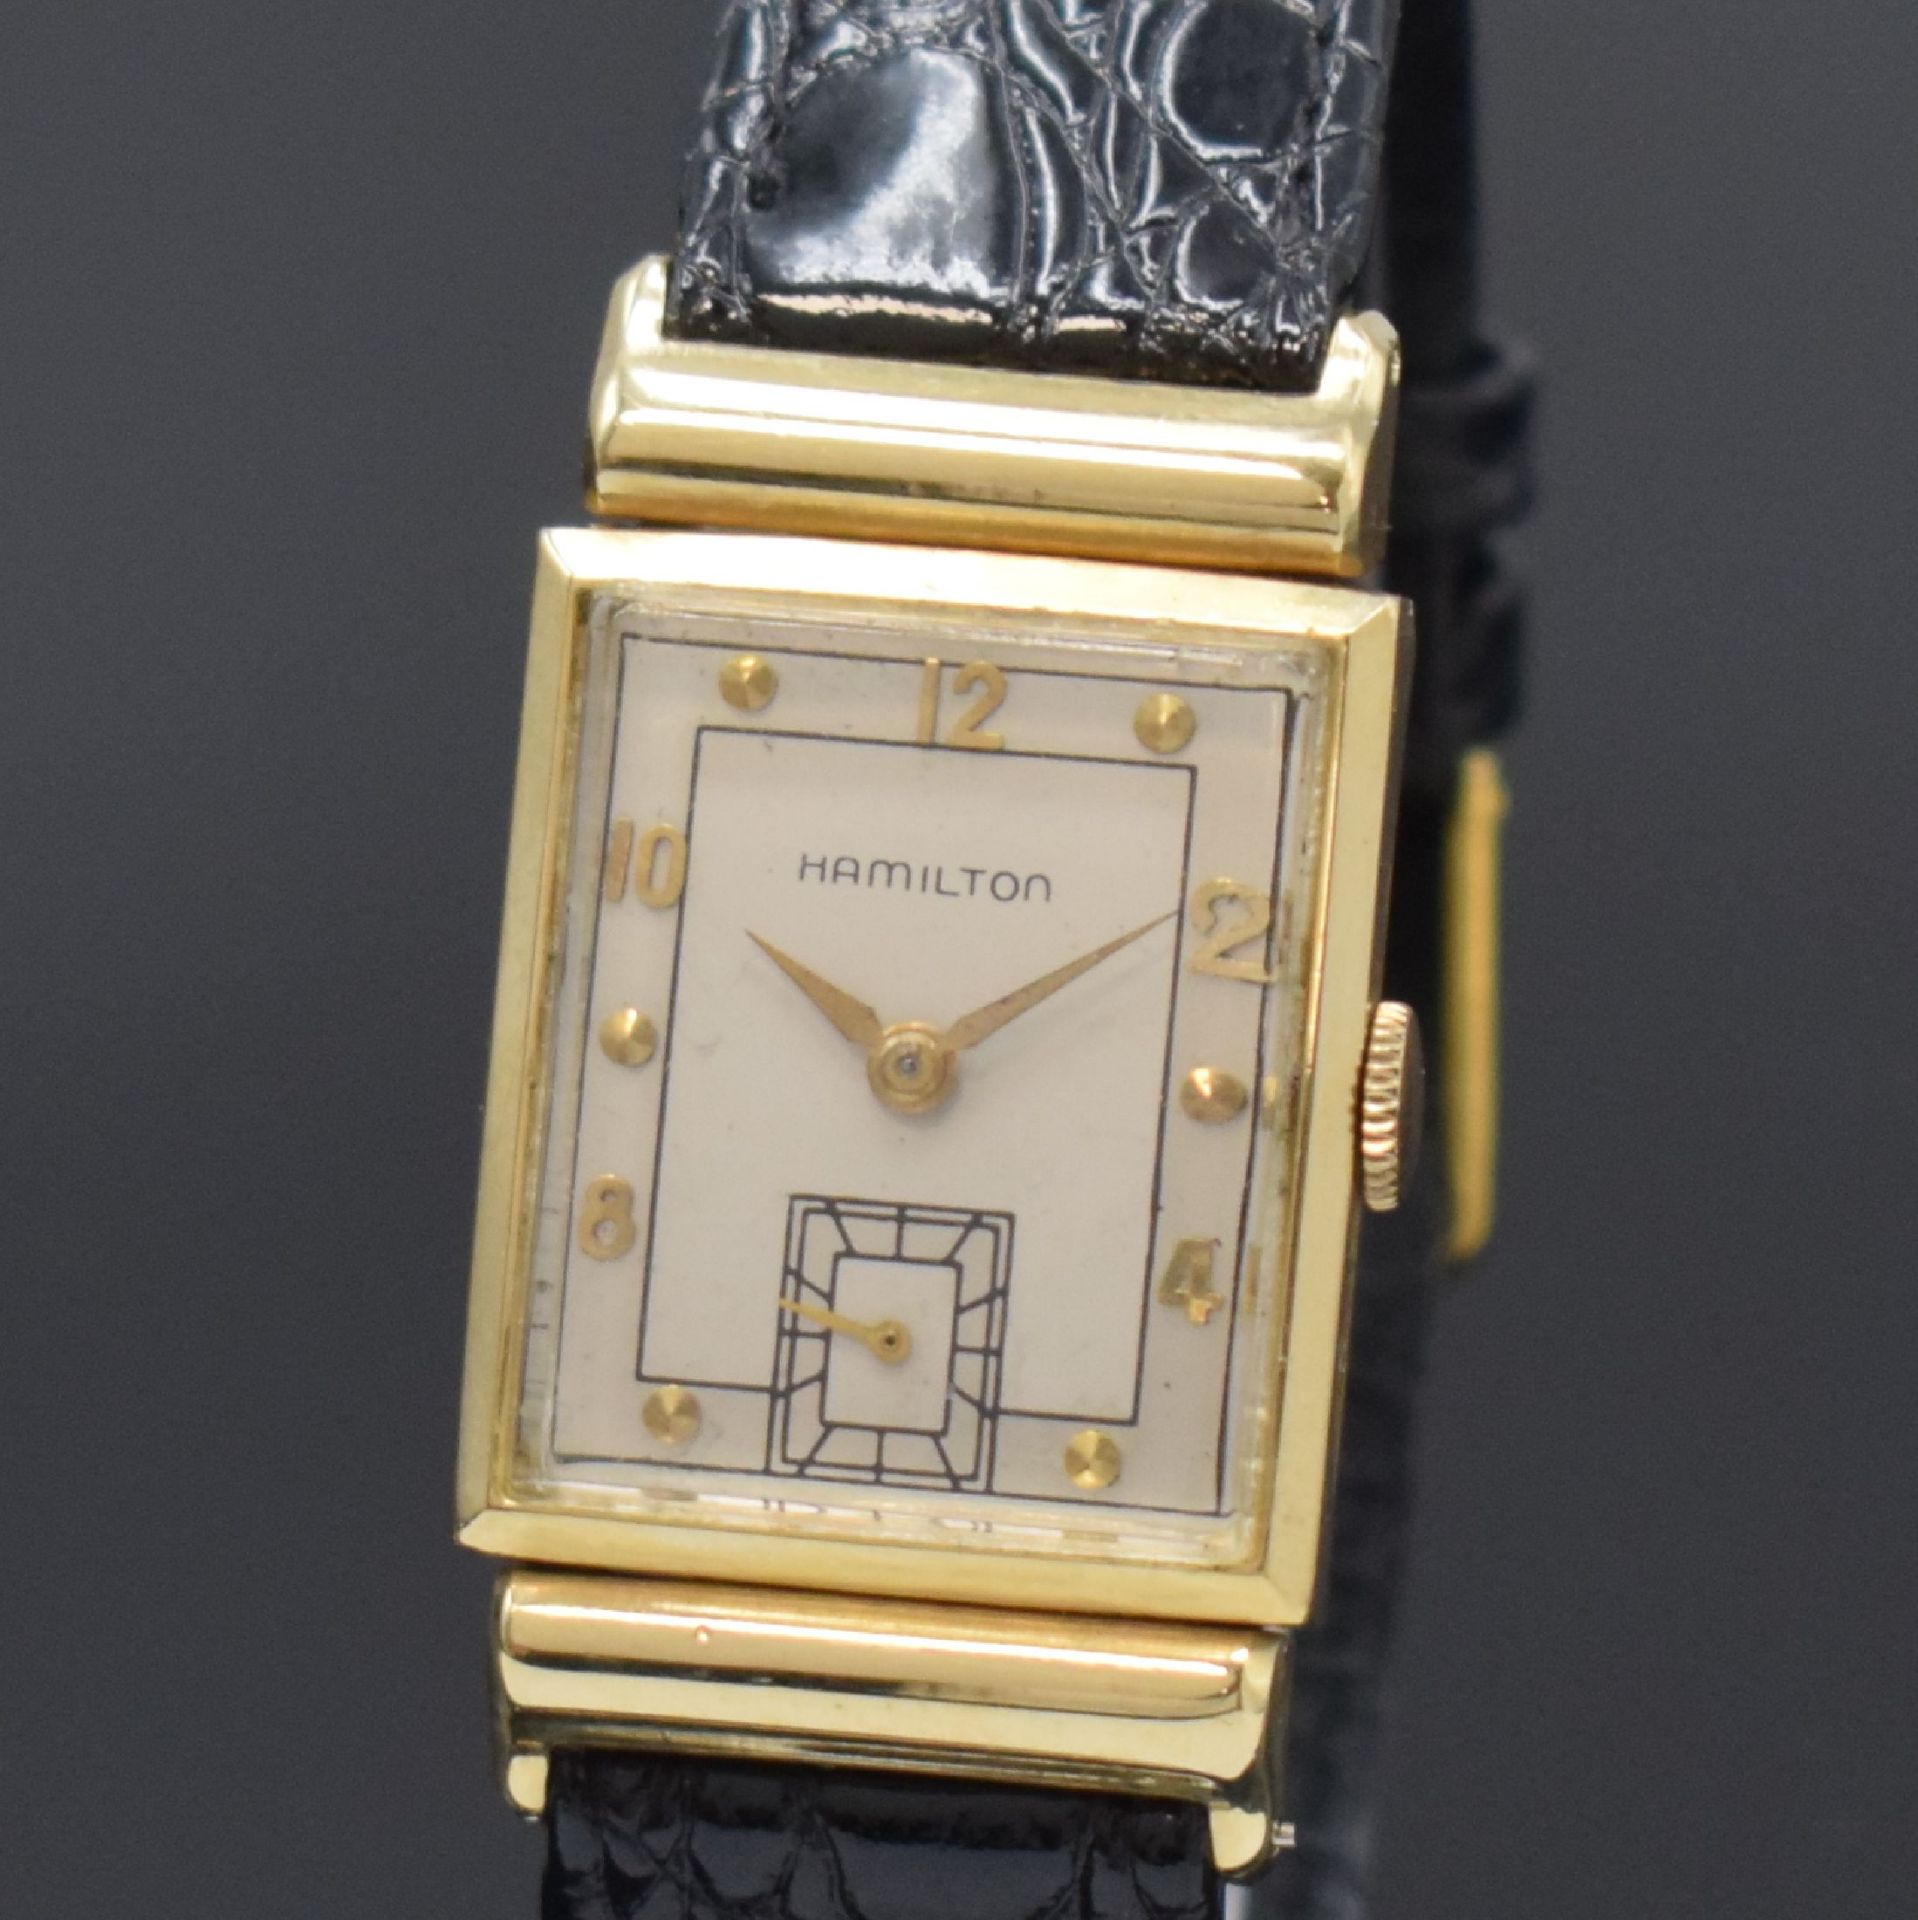 HAMILTON rechteckige Armbanduhr in 14k Gelbgold, USA um - Image 2 of 6